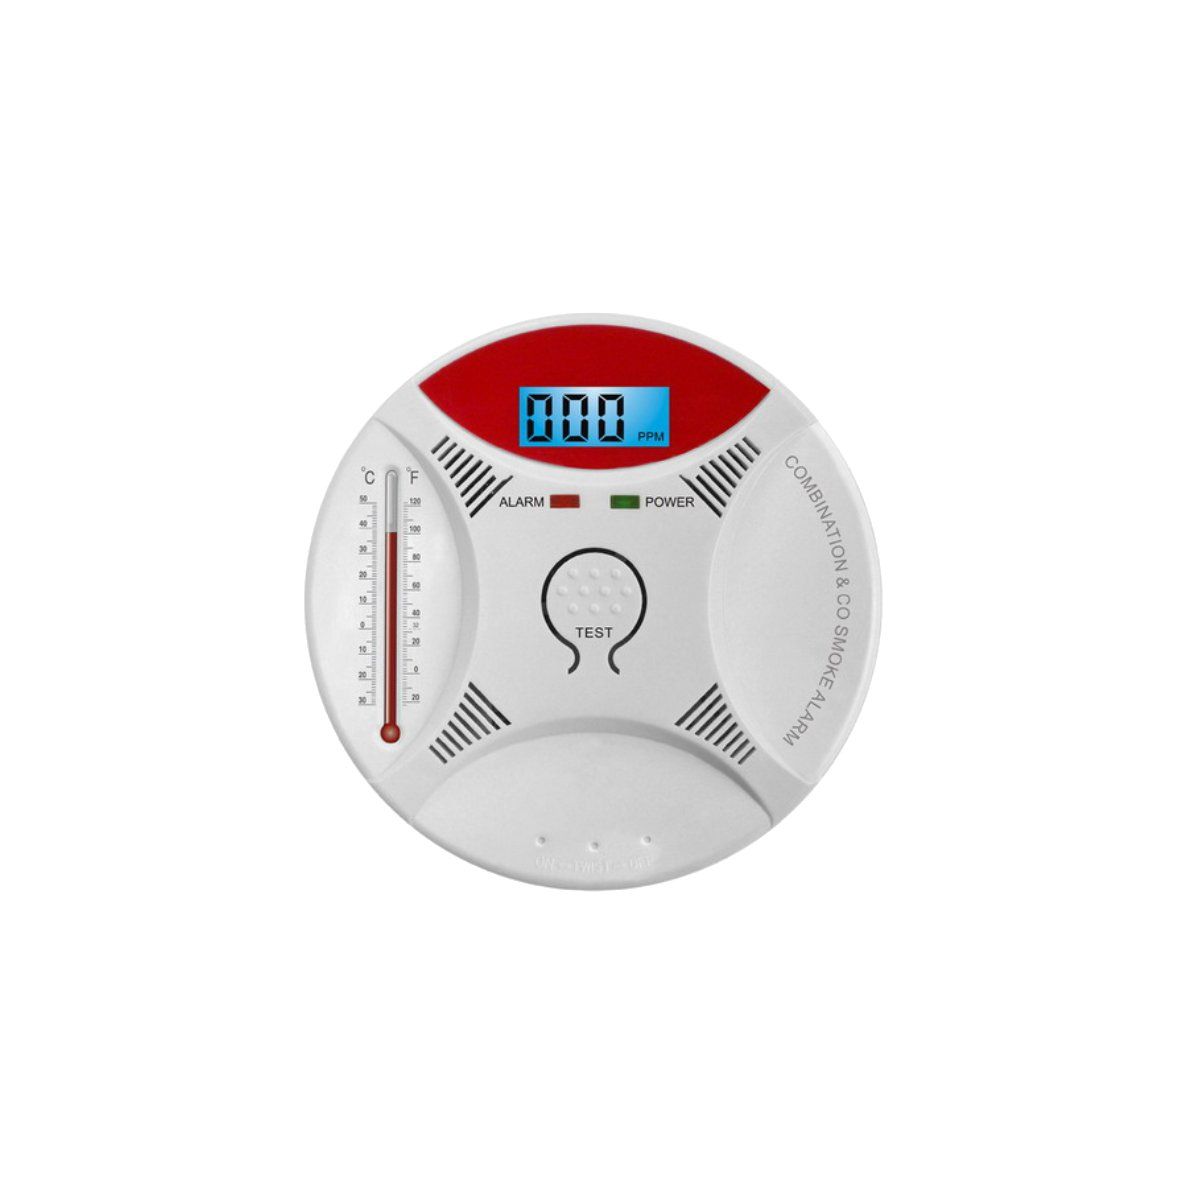 2-in-1-Carbon-Monoxide-Detector-Fire-Gas-Sensor-Monitor-Warning-Alarm-Home-Security-Alarm-1454772